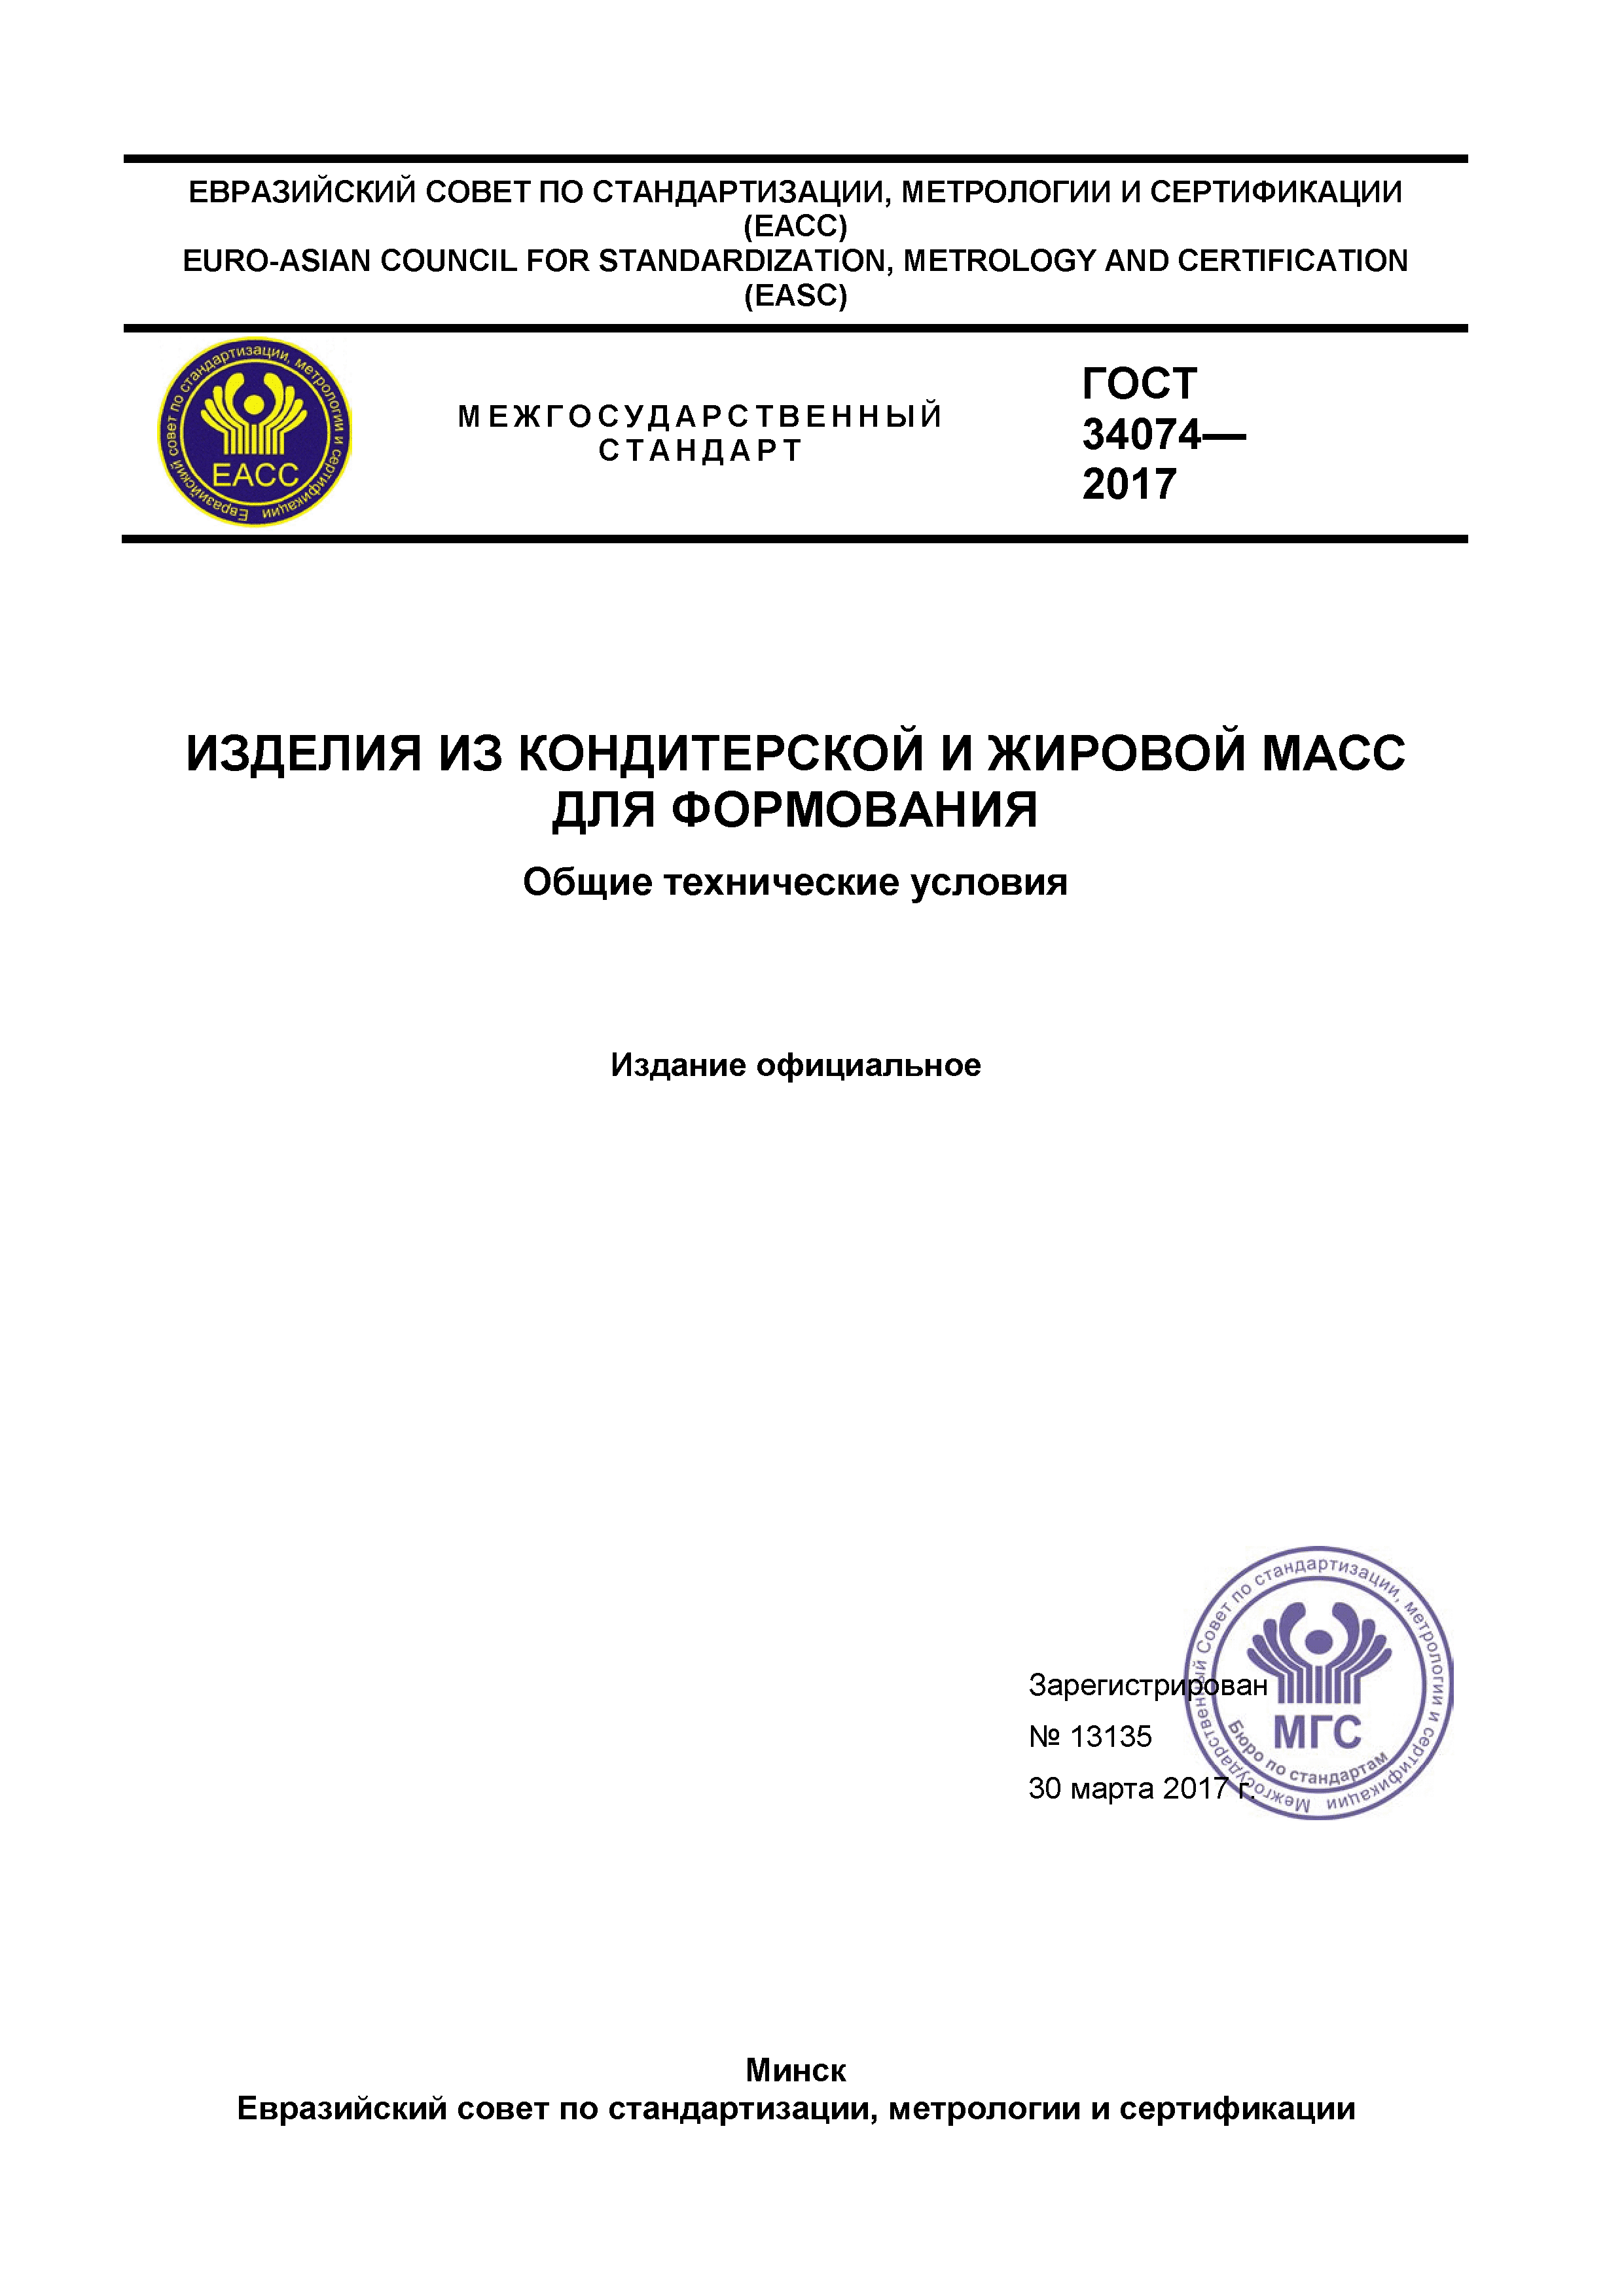 ГОСТ 34074-2017